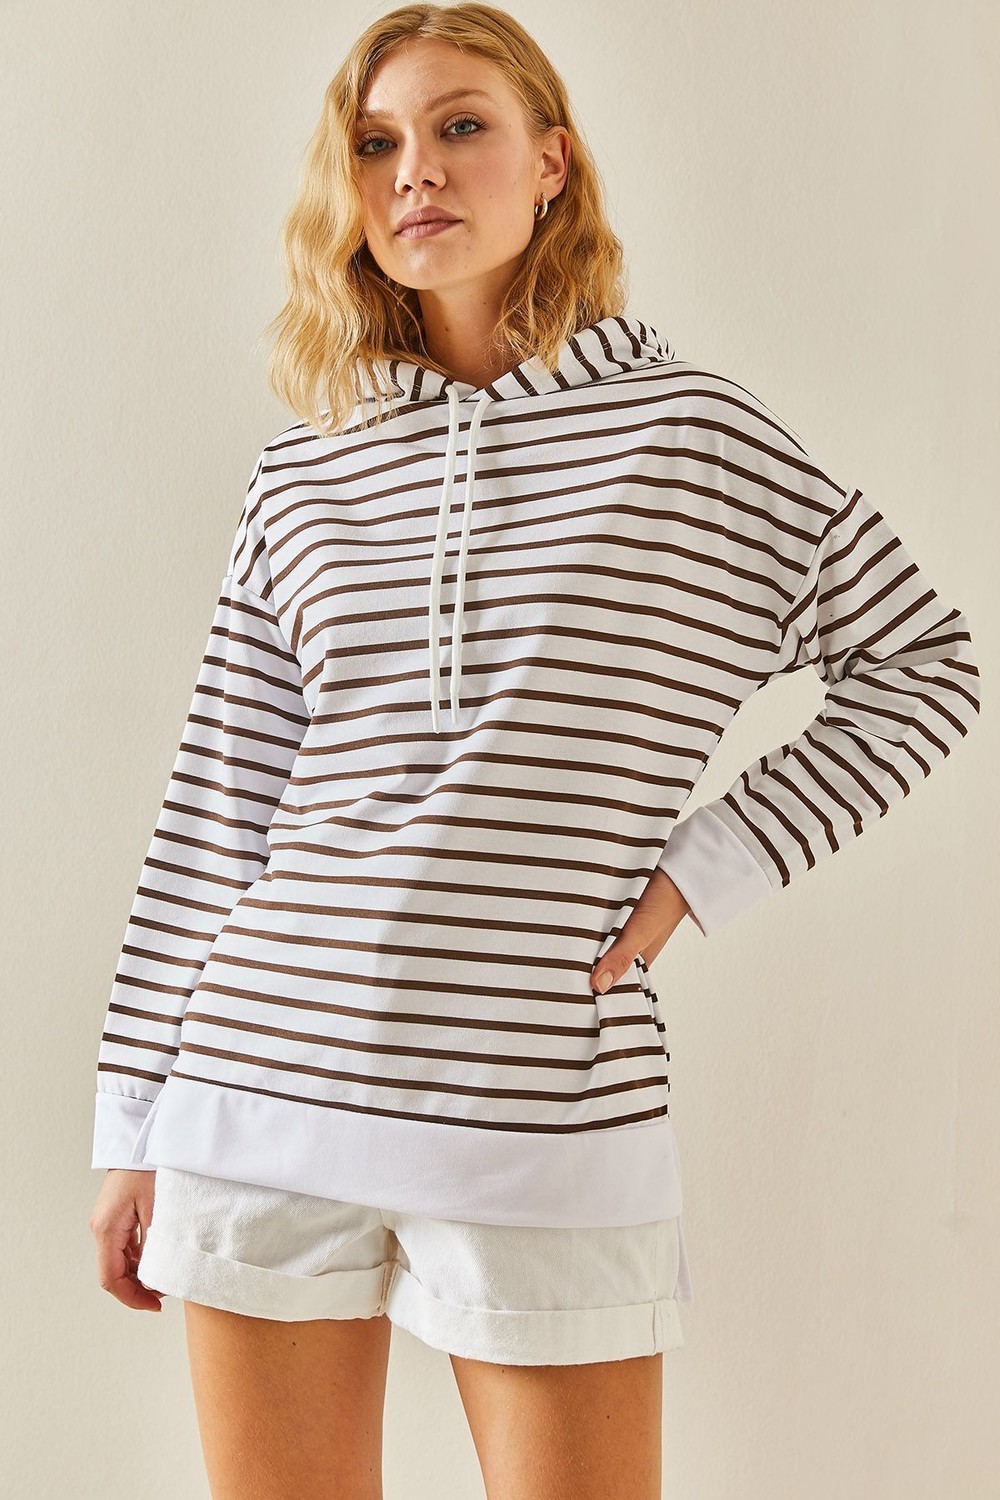 XHAN Mink Striped & Hooded Sweatshirt 3YXK8-47554-29